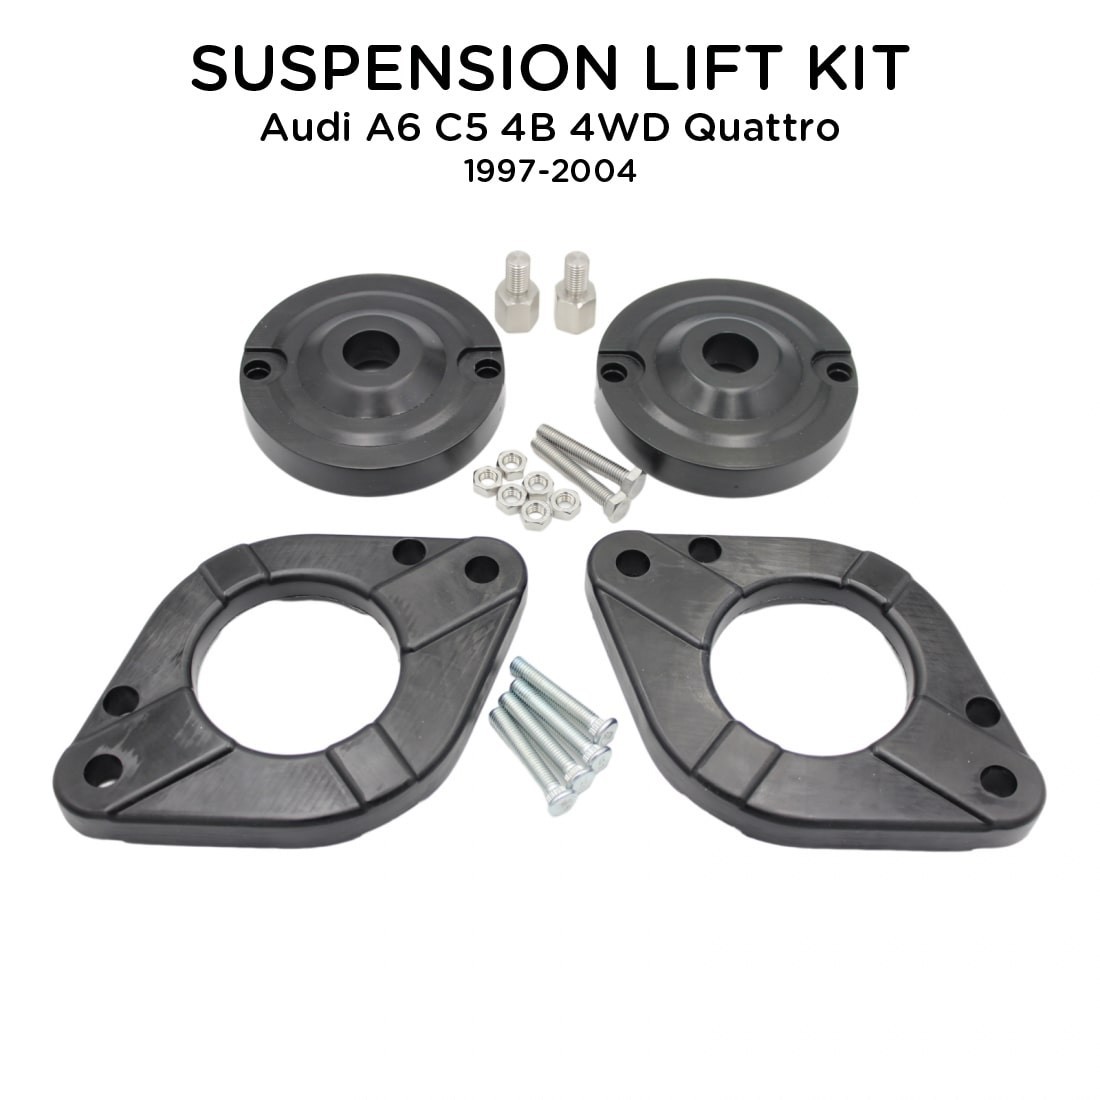 Suspension Lift Kit For Audi A6 C5 4B 4WD 1997-2004